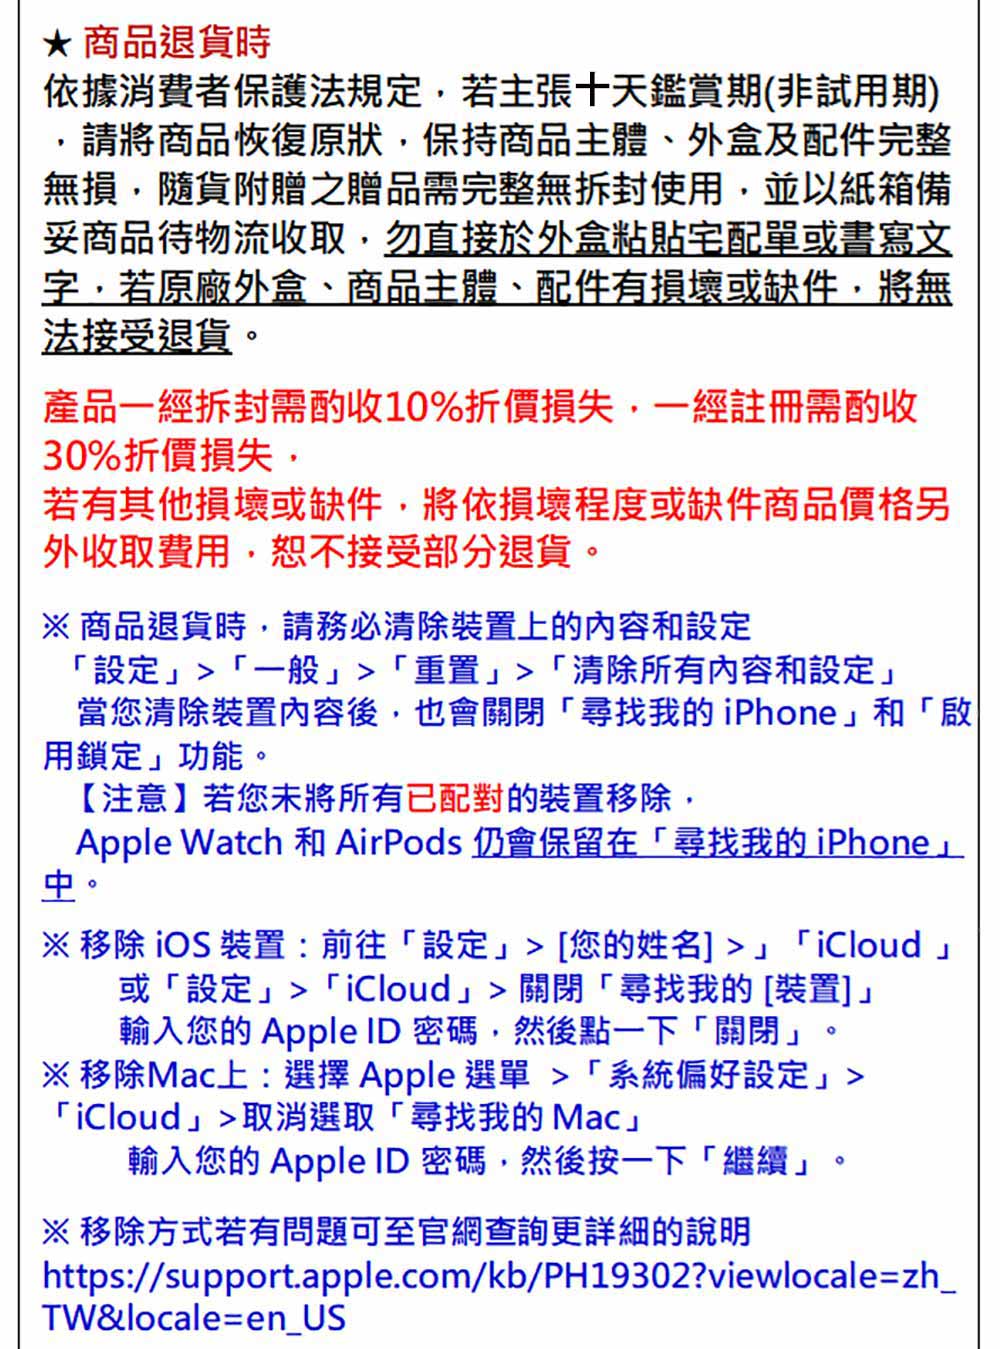 Apple MacBook Air 13.6吋 M3 晶片 